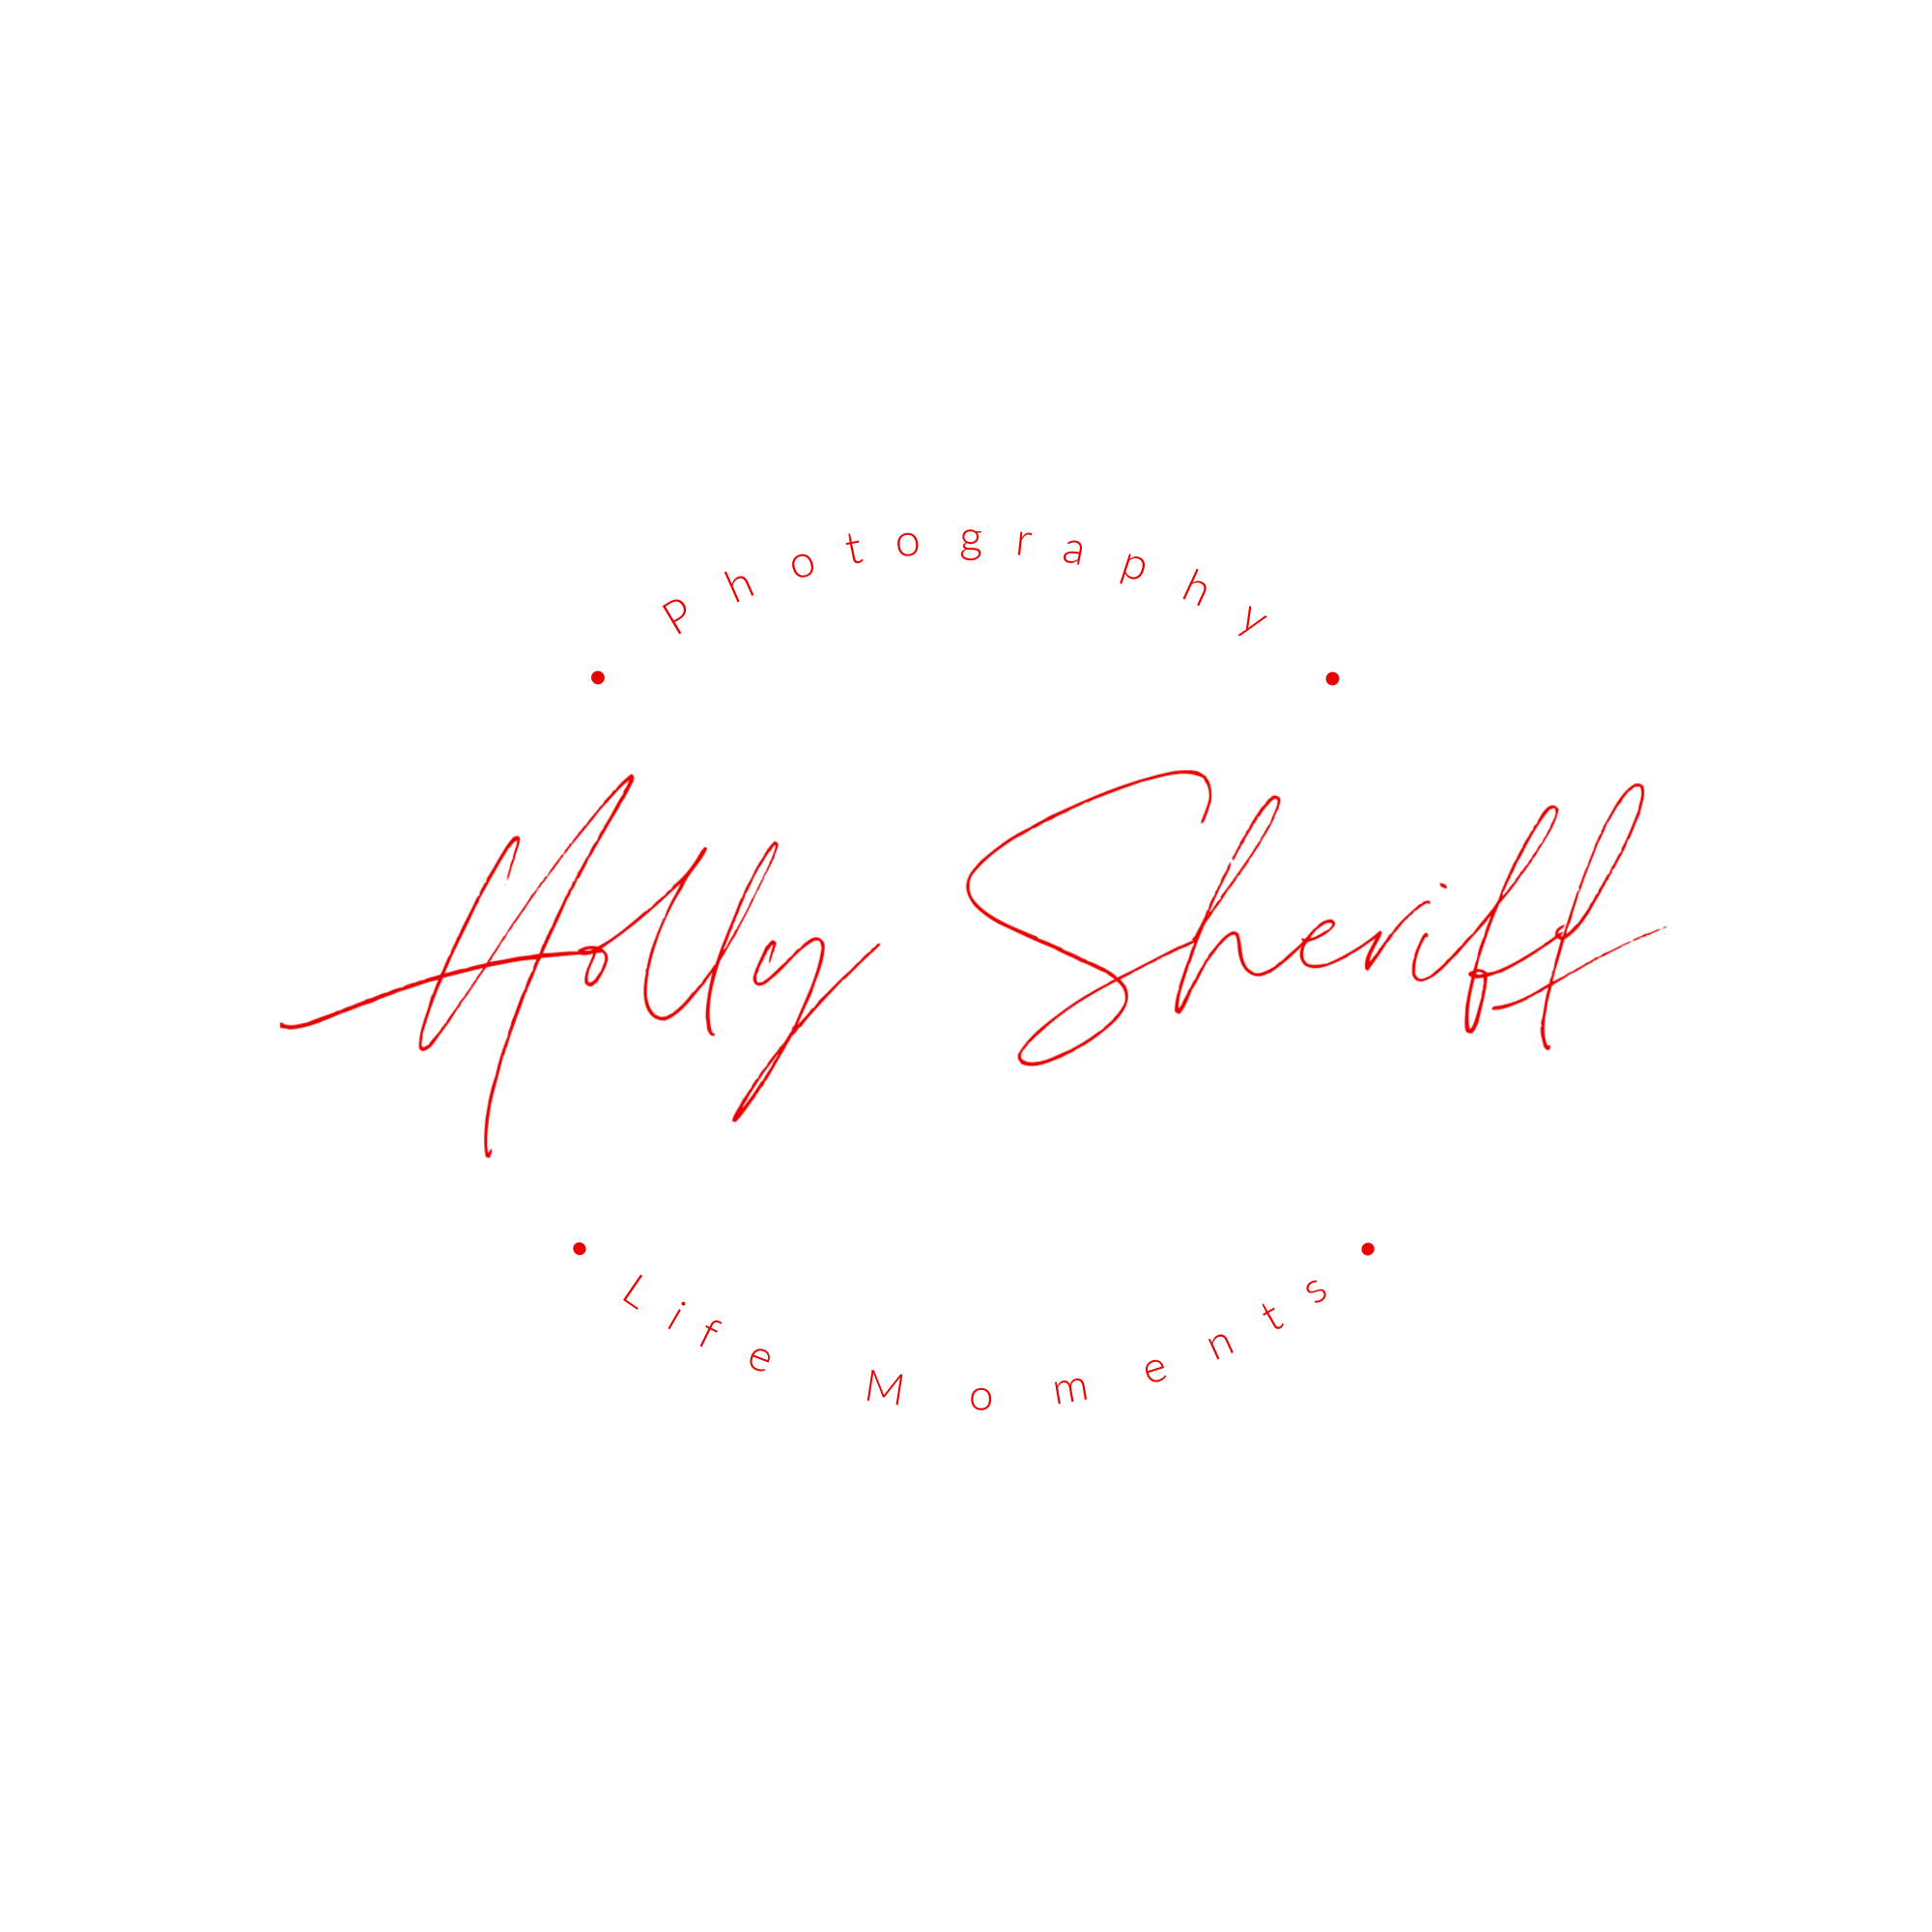 Holly Sheriff